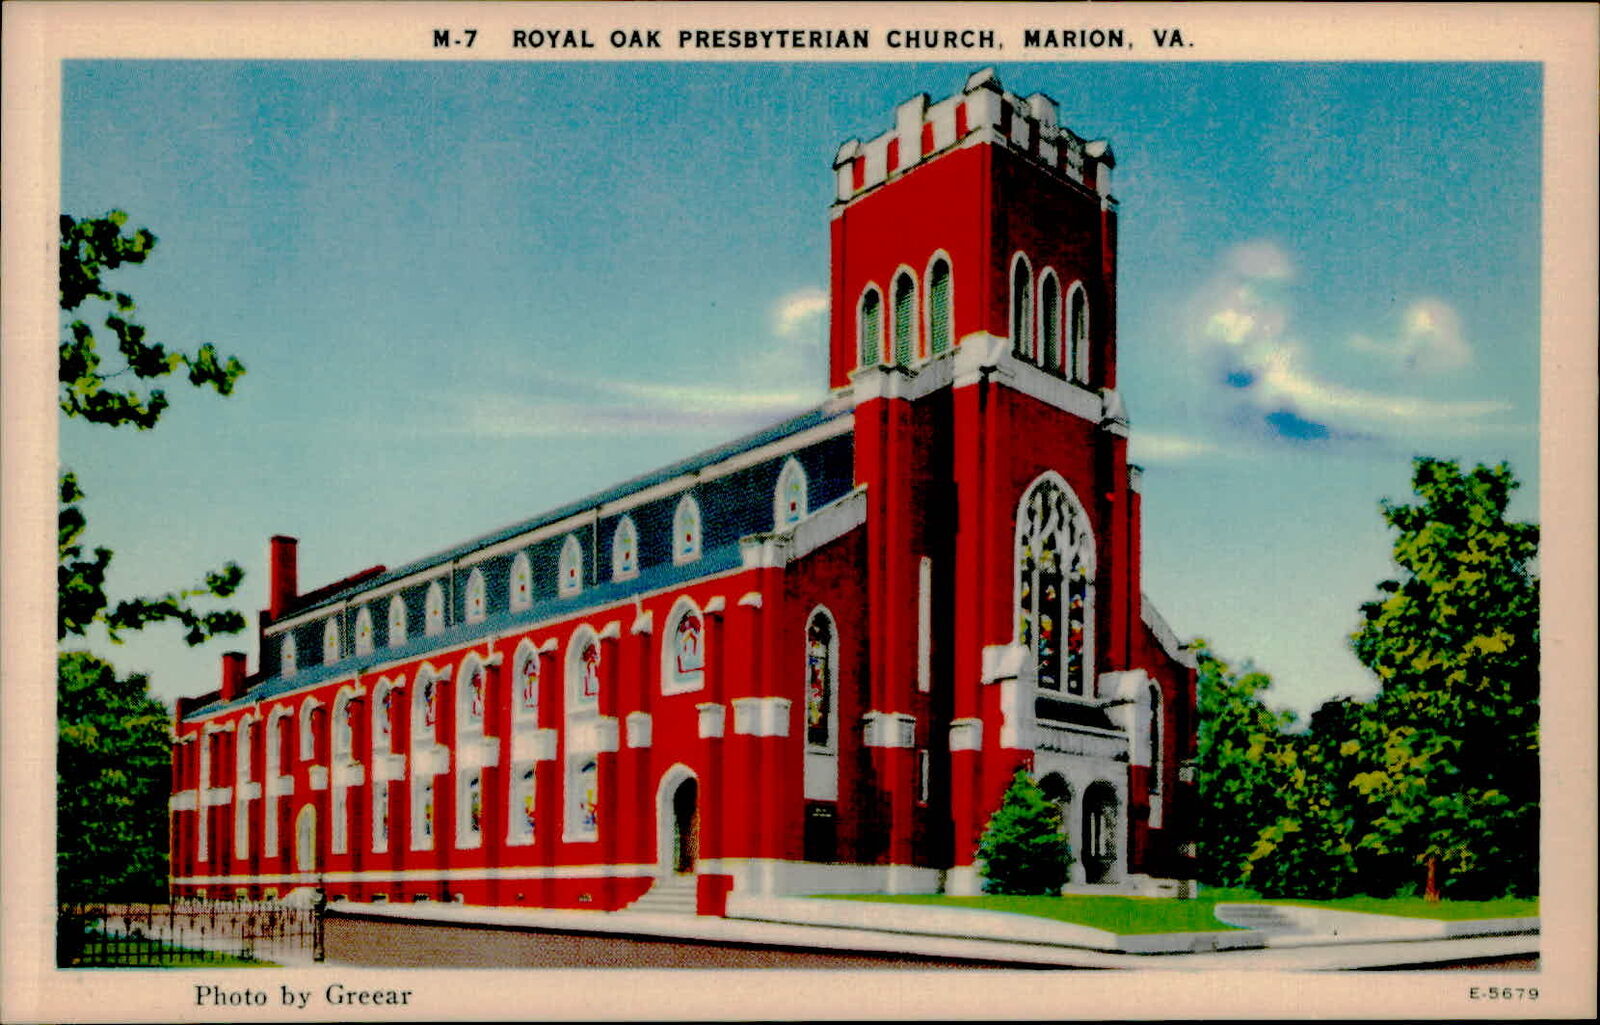 Postcard: M-7 ROYAL OAK PRESBYTERIAN CHURCH, MARION, VA. E-5679 Photo